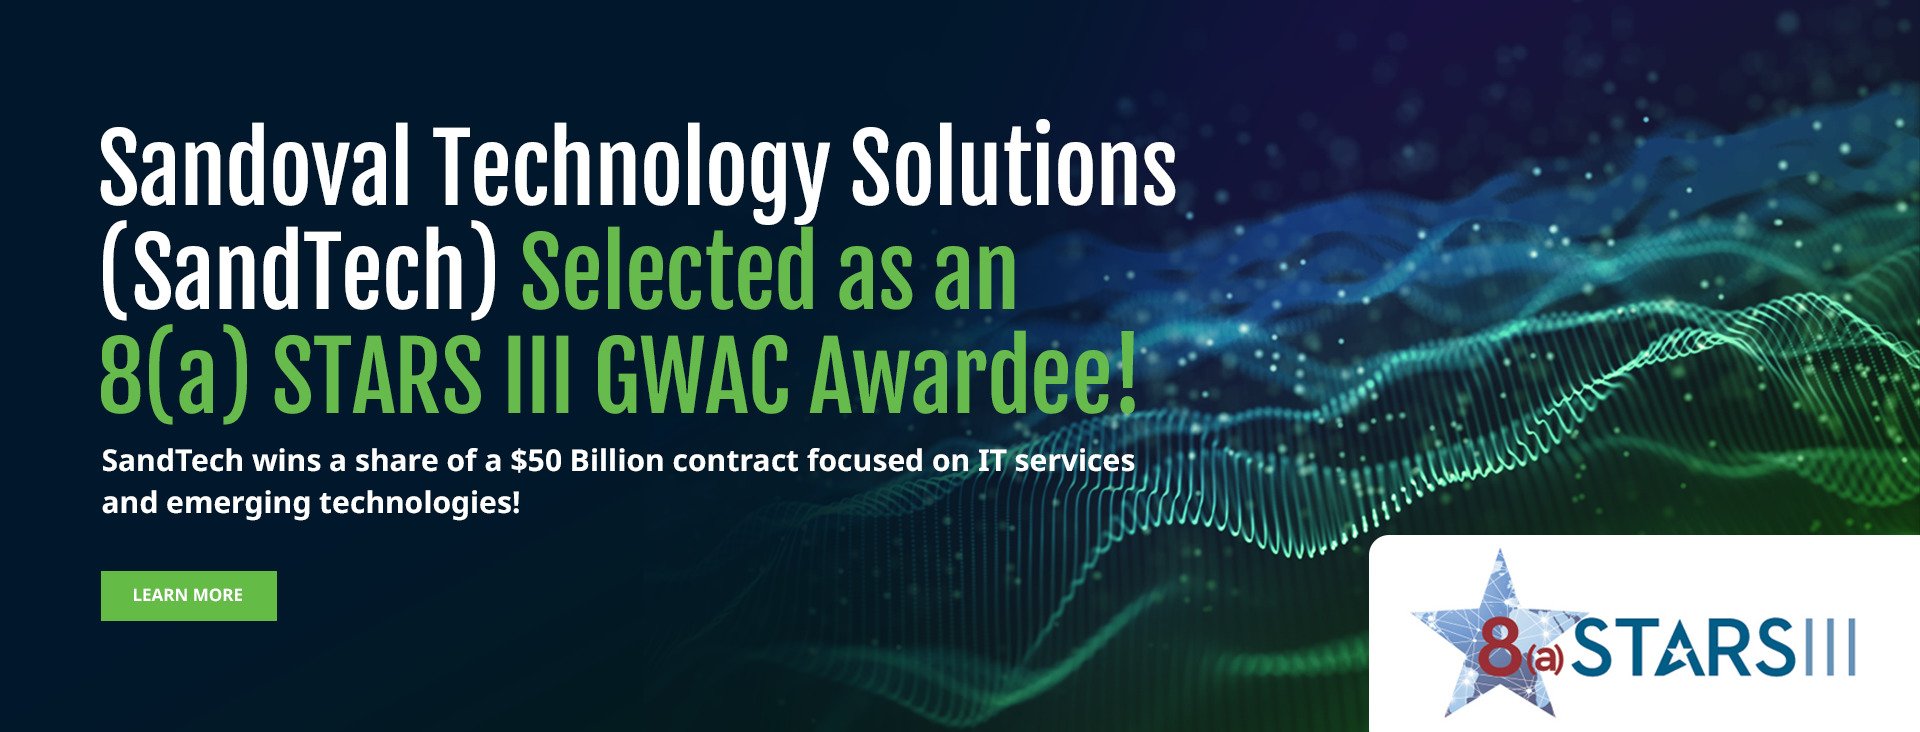 Sandoval Technology Solutions (SandTech) Selected as an 8(a) STARS III GWAC Awardee